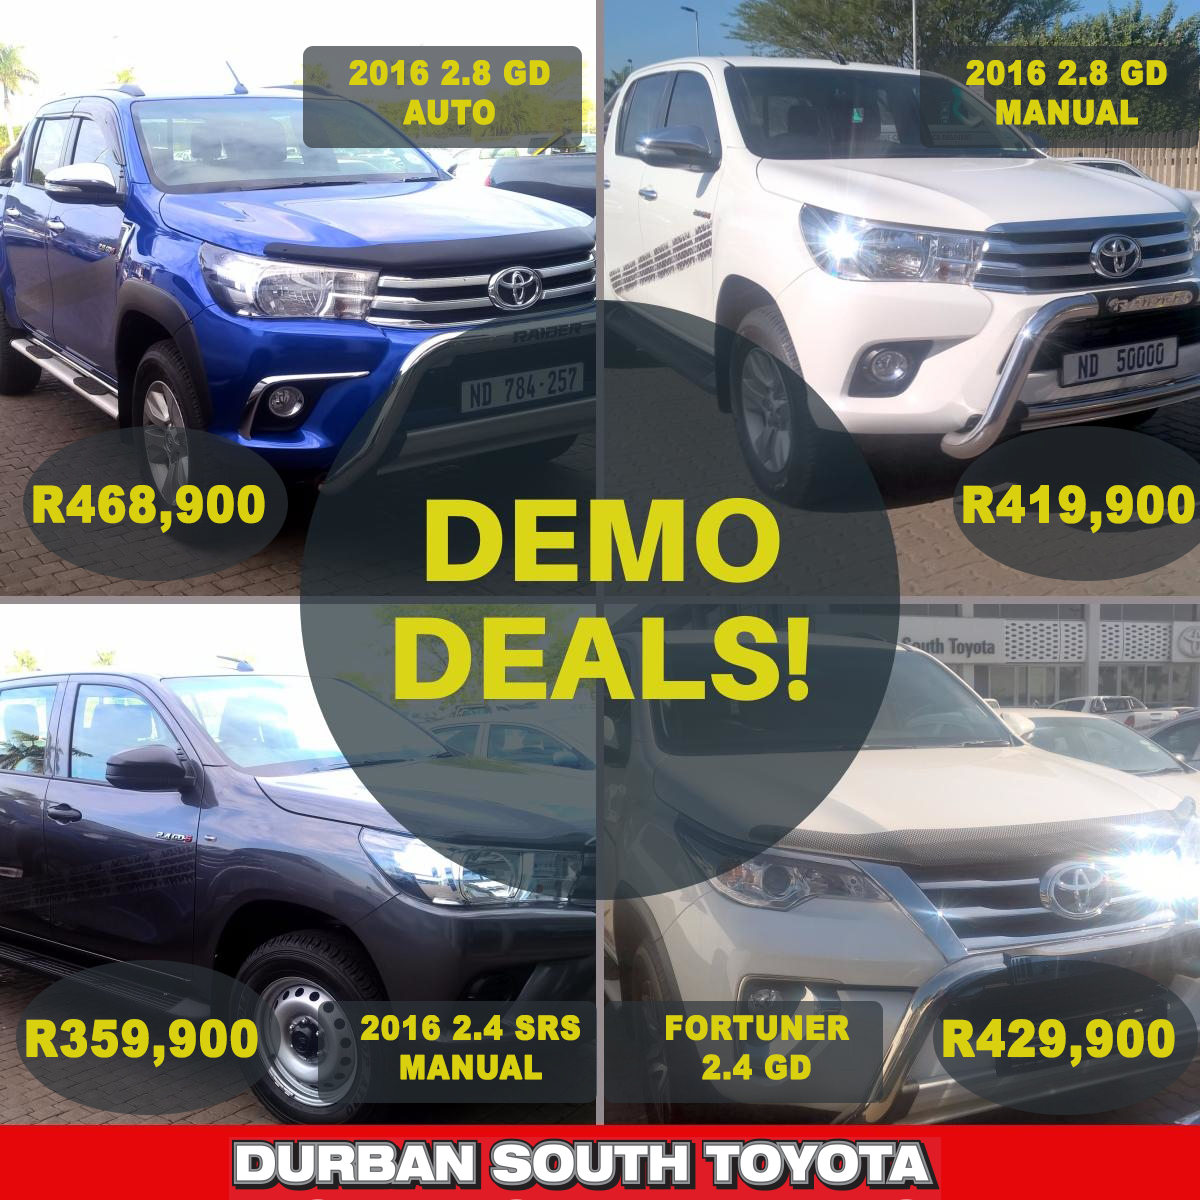 Toyota Hilux & Fortuner Demo Deals